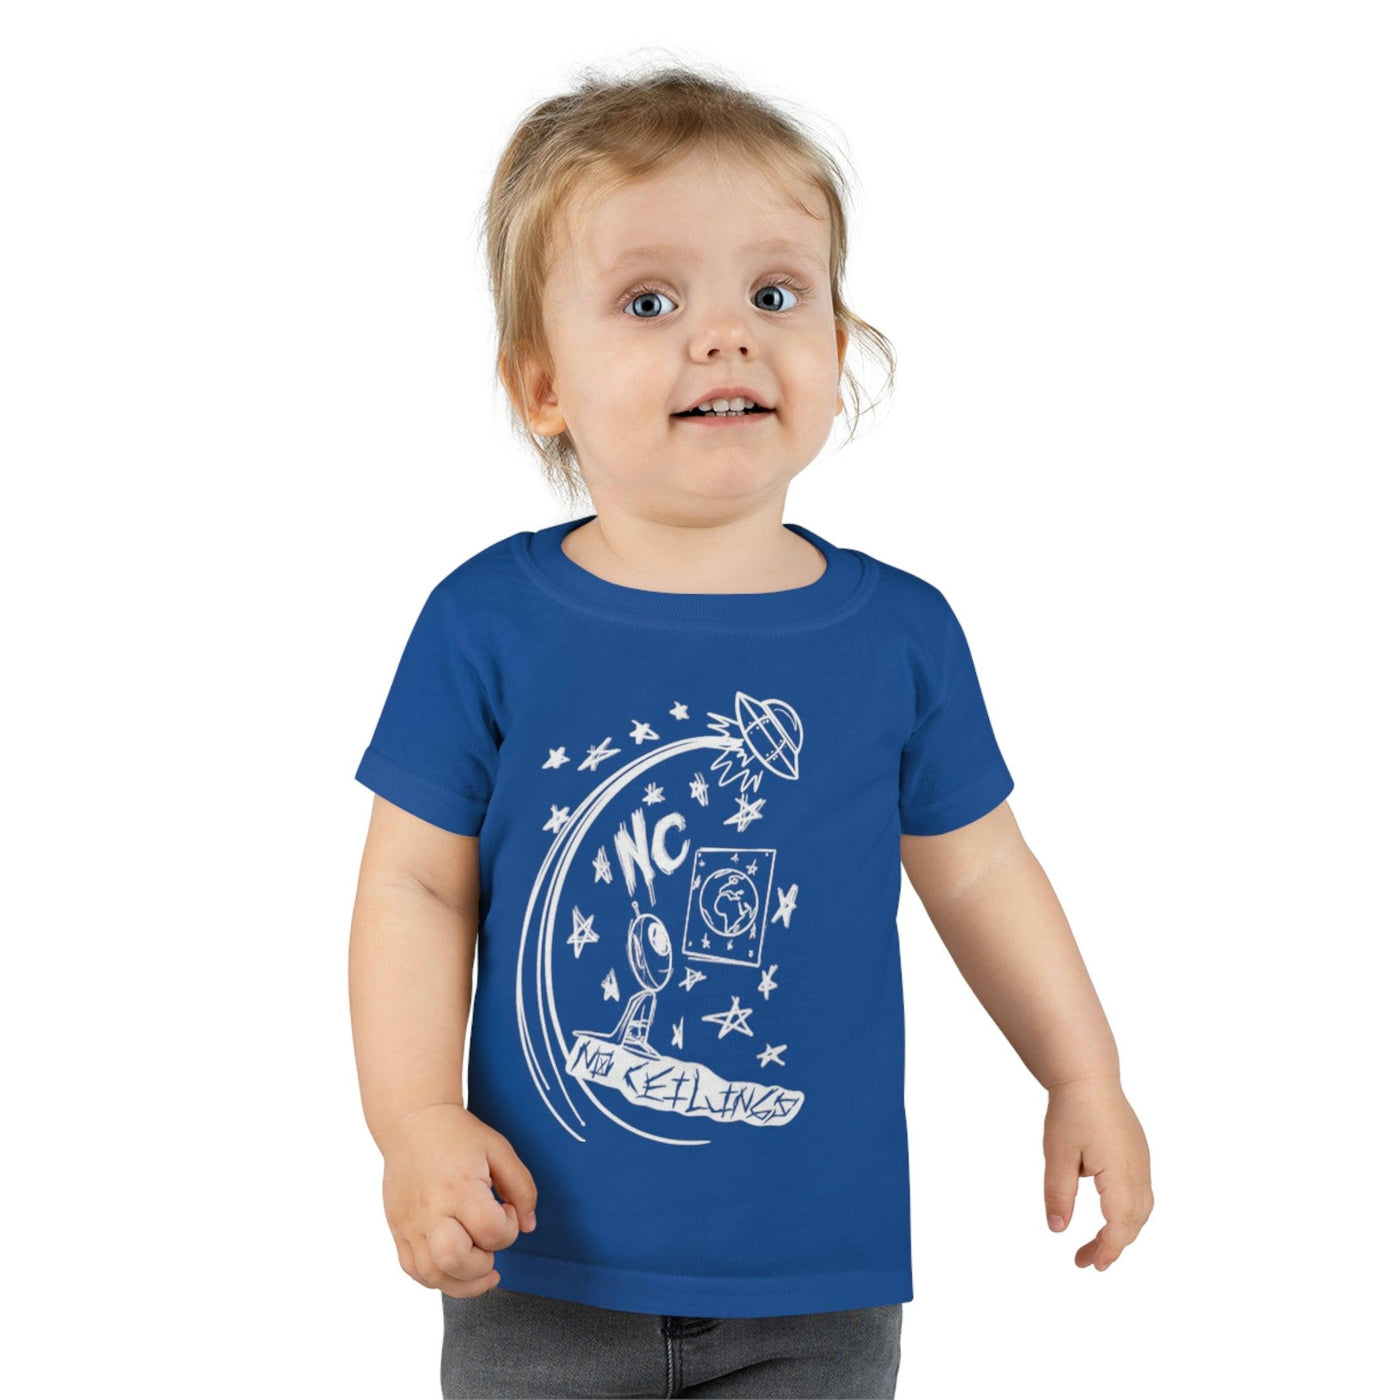 Alien Dreams Toddler T-shirt - NoCeilingsClothing